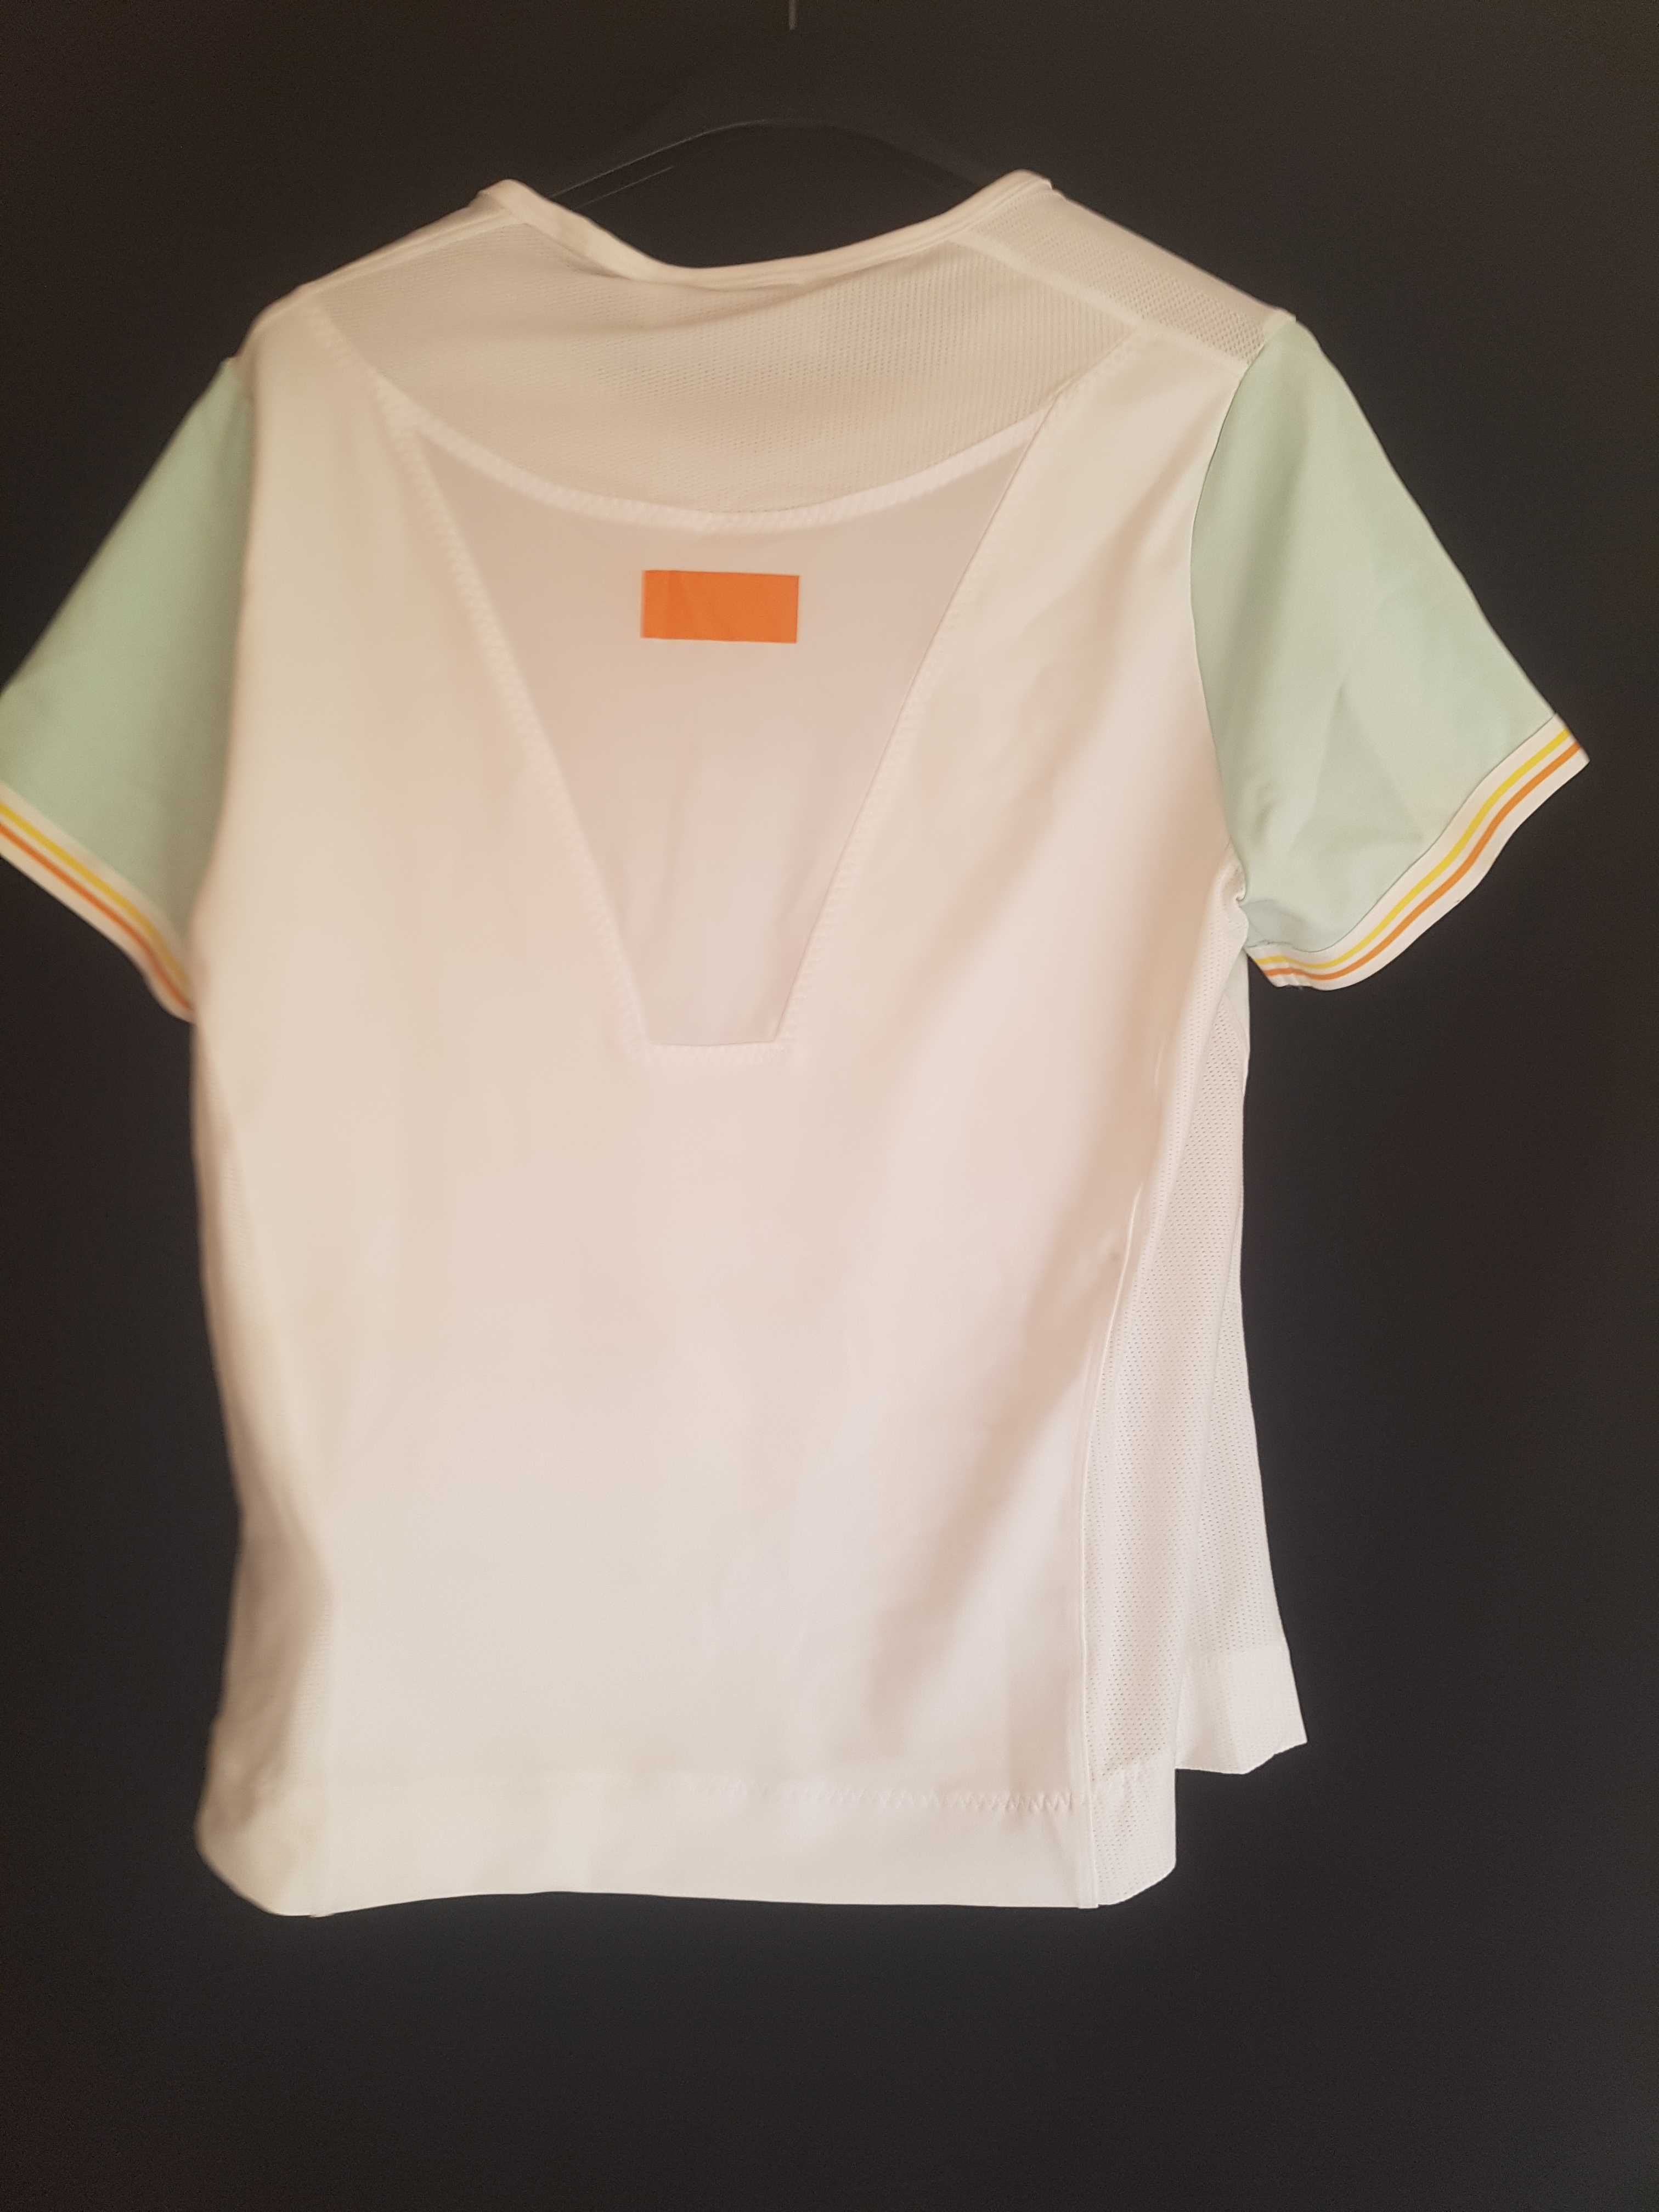 Koszulka Adidas Stella McCartney rozmiar M nowa zkompletem metek